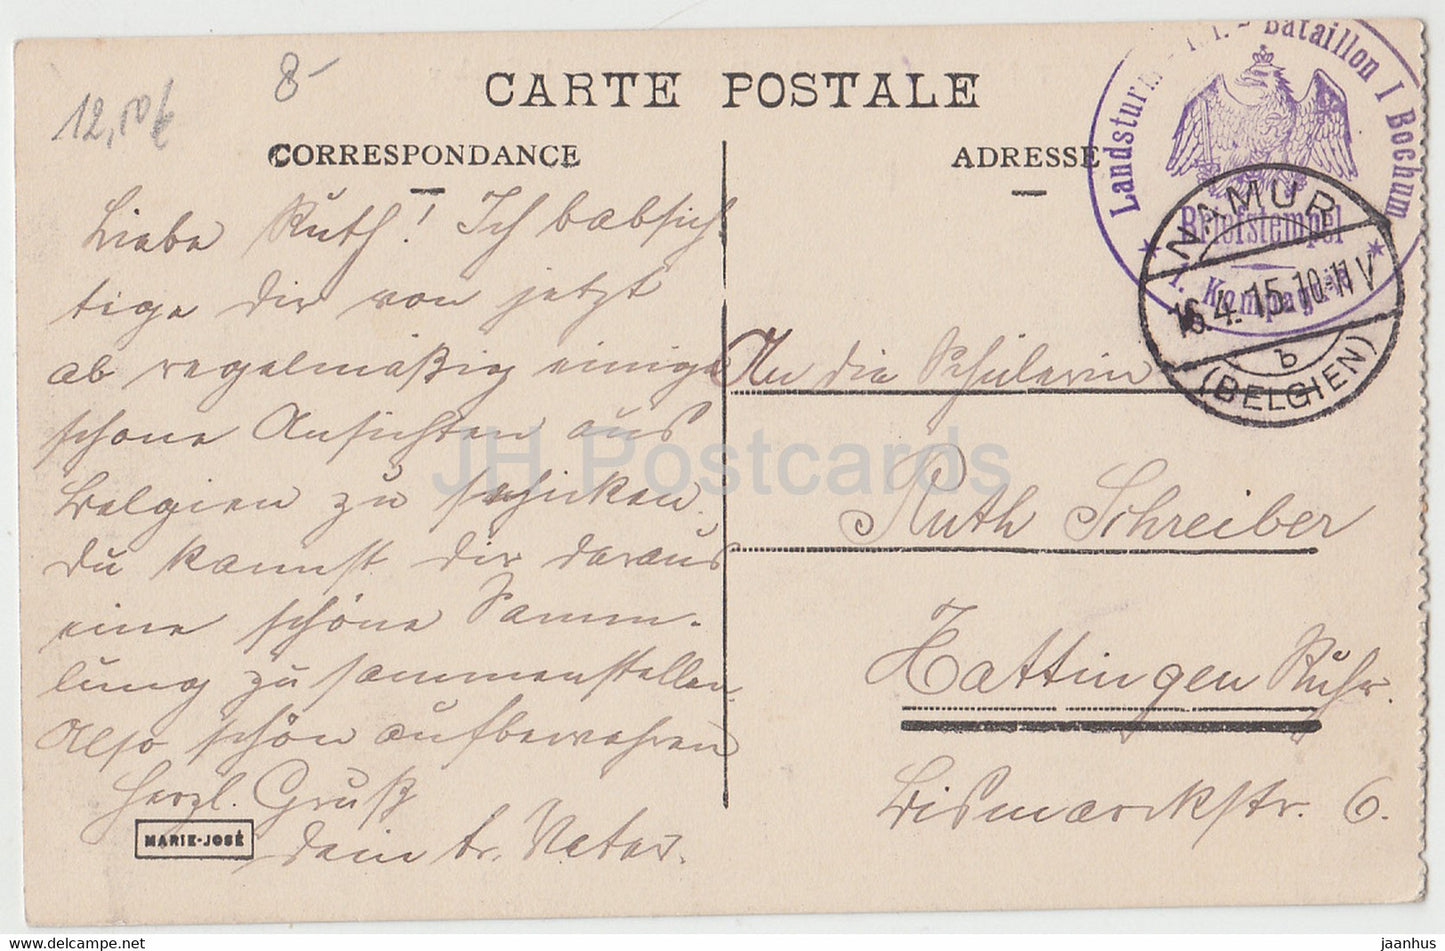 Namur - Citadelle - Panorama vers la Sambre - Landsturm Inf Bataillon - Feldpost - alte Postkarte - 1915 - Belgien - gebraucht